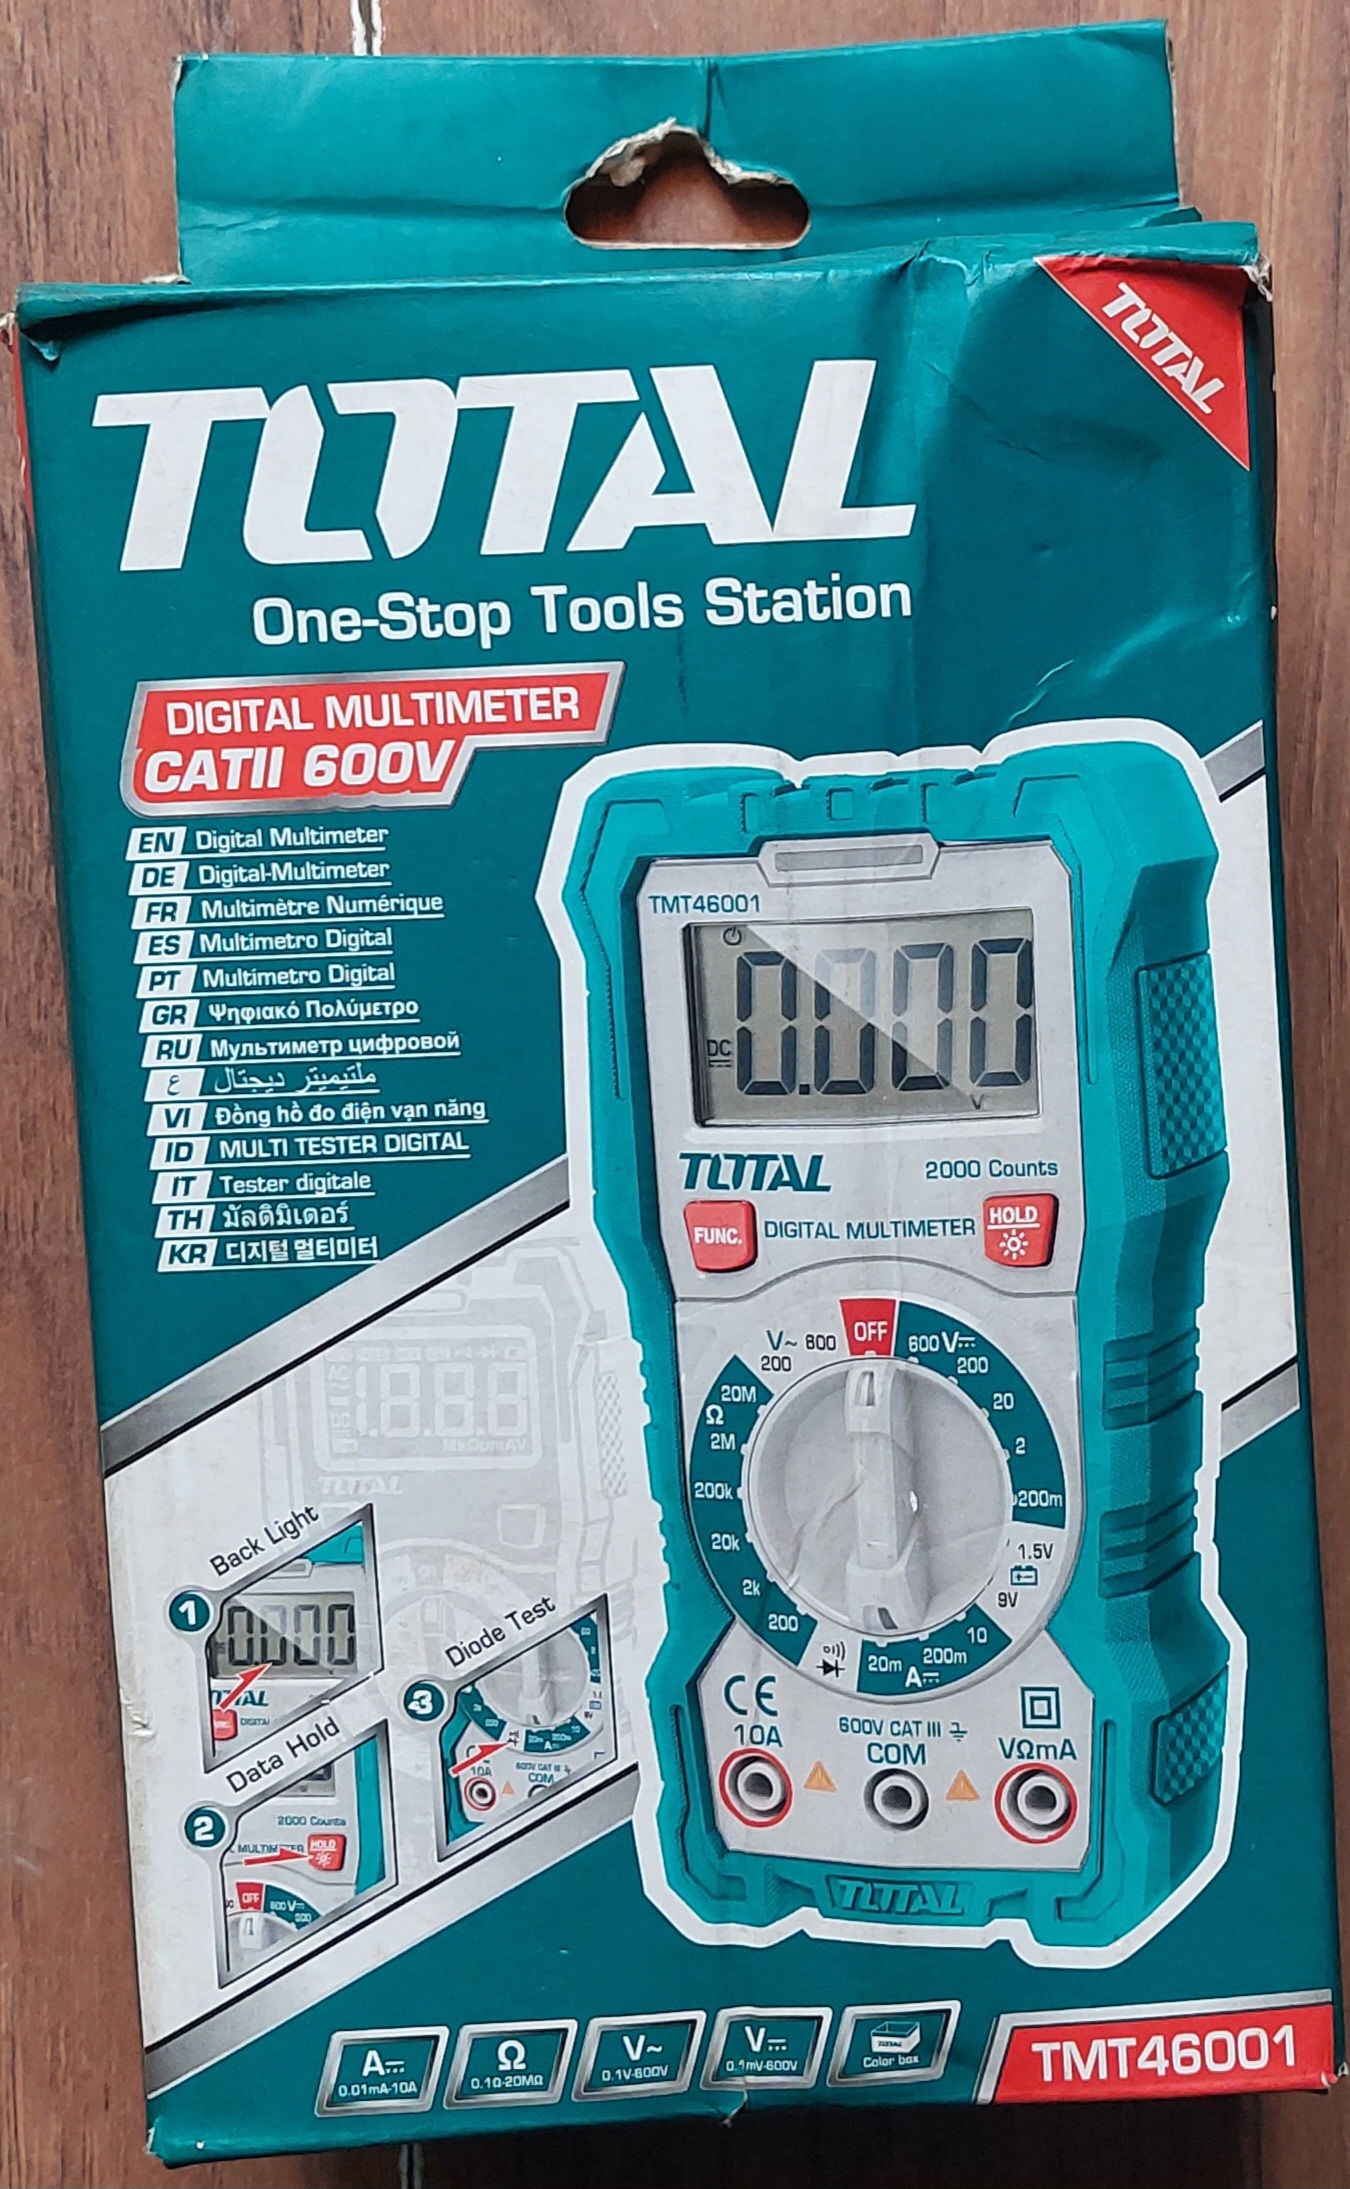 TMT46001 Digital Multimeter